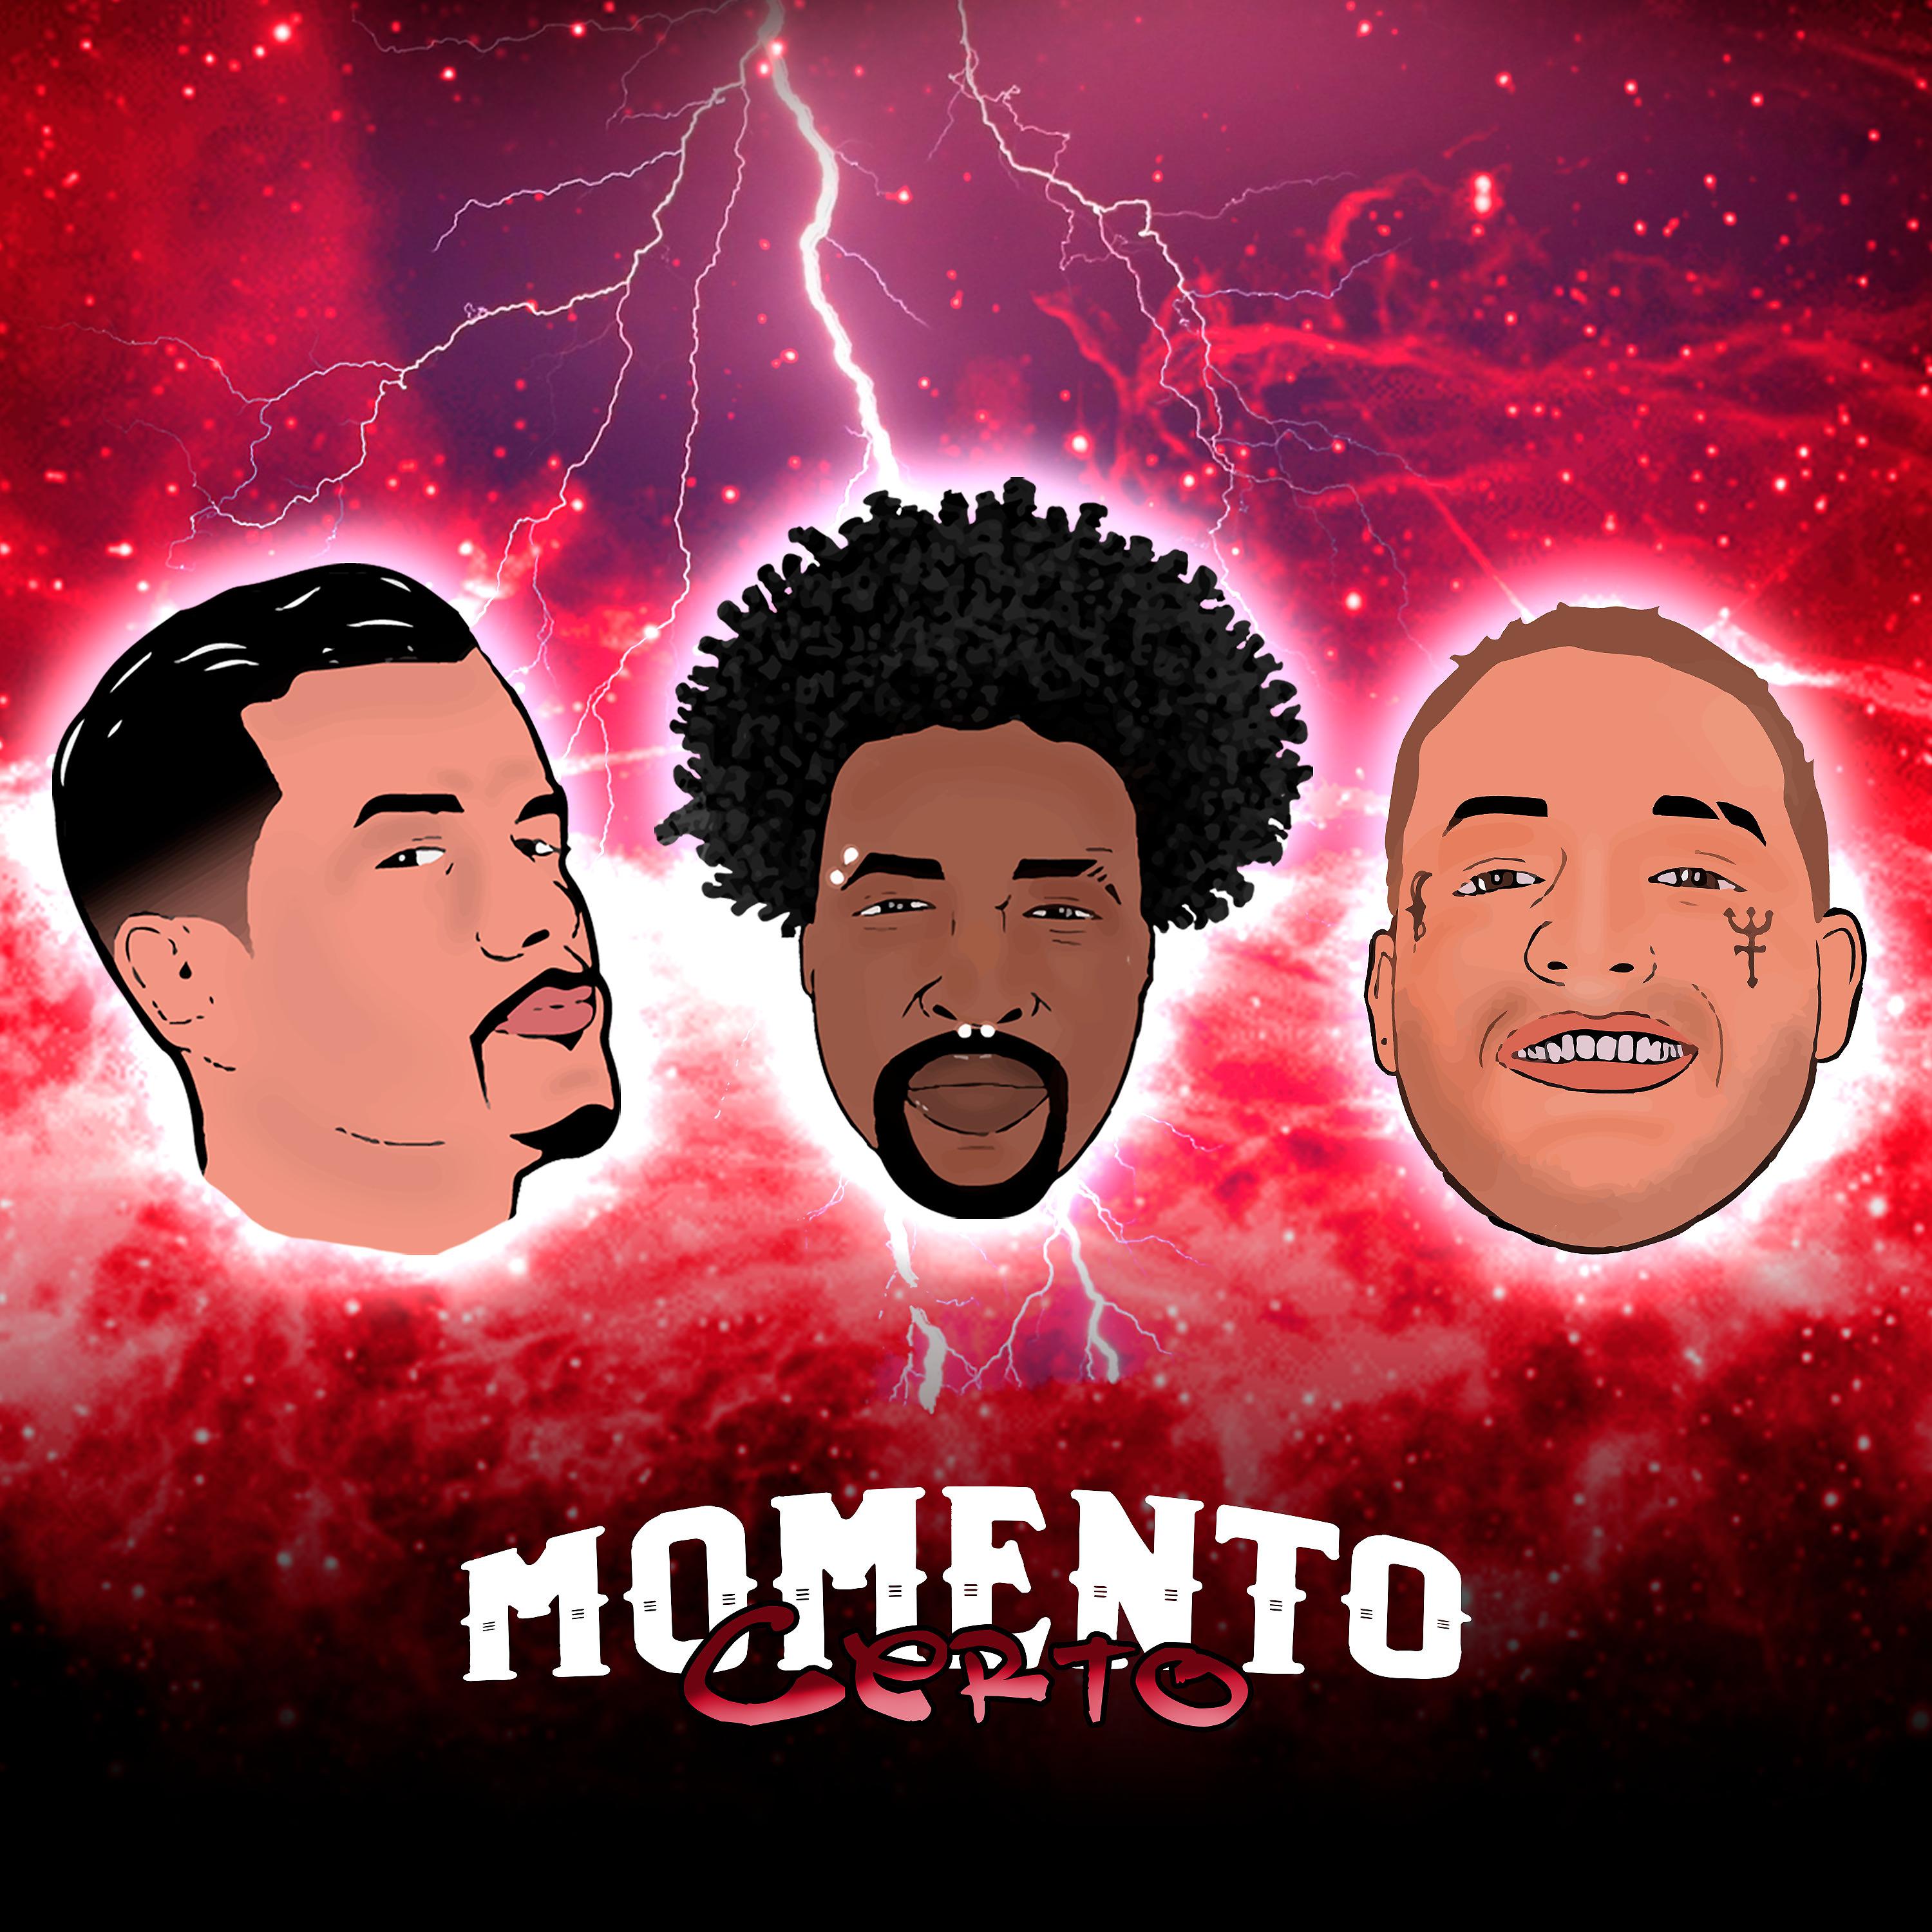 Постер альбома Momento Certo